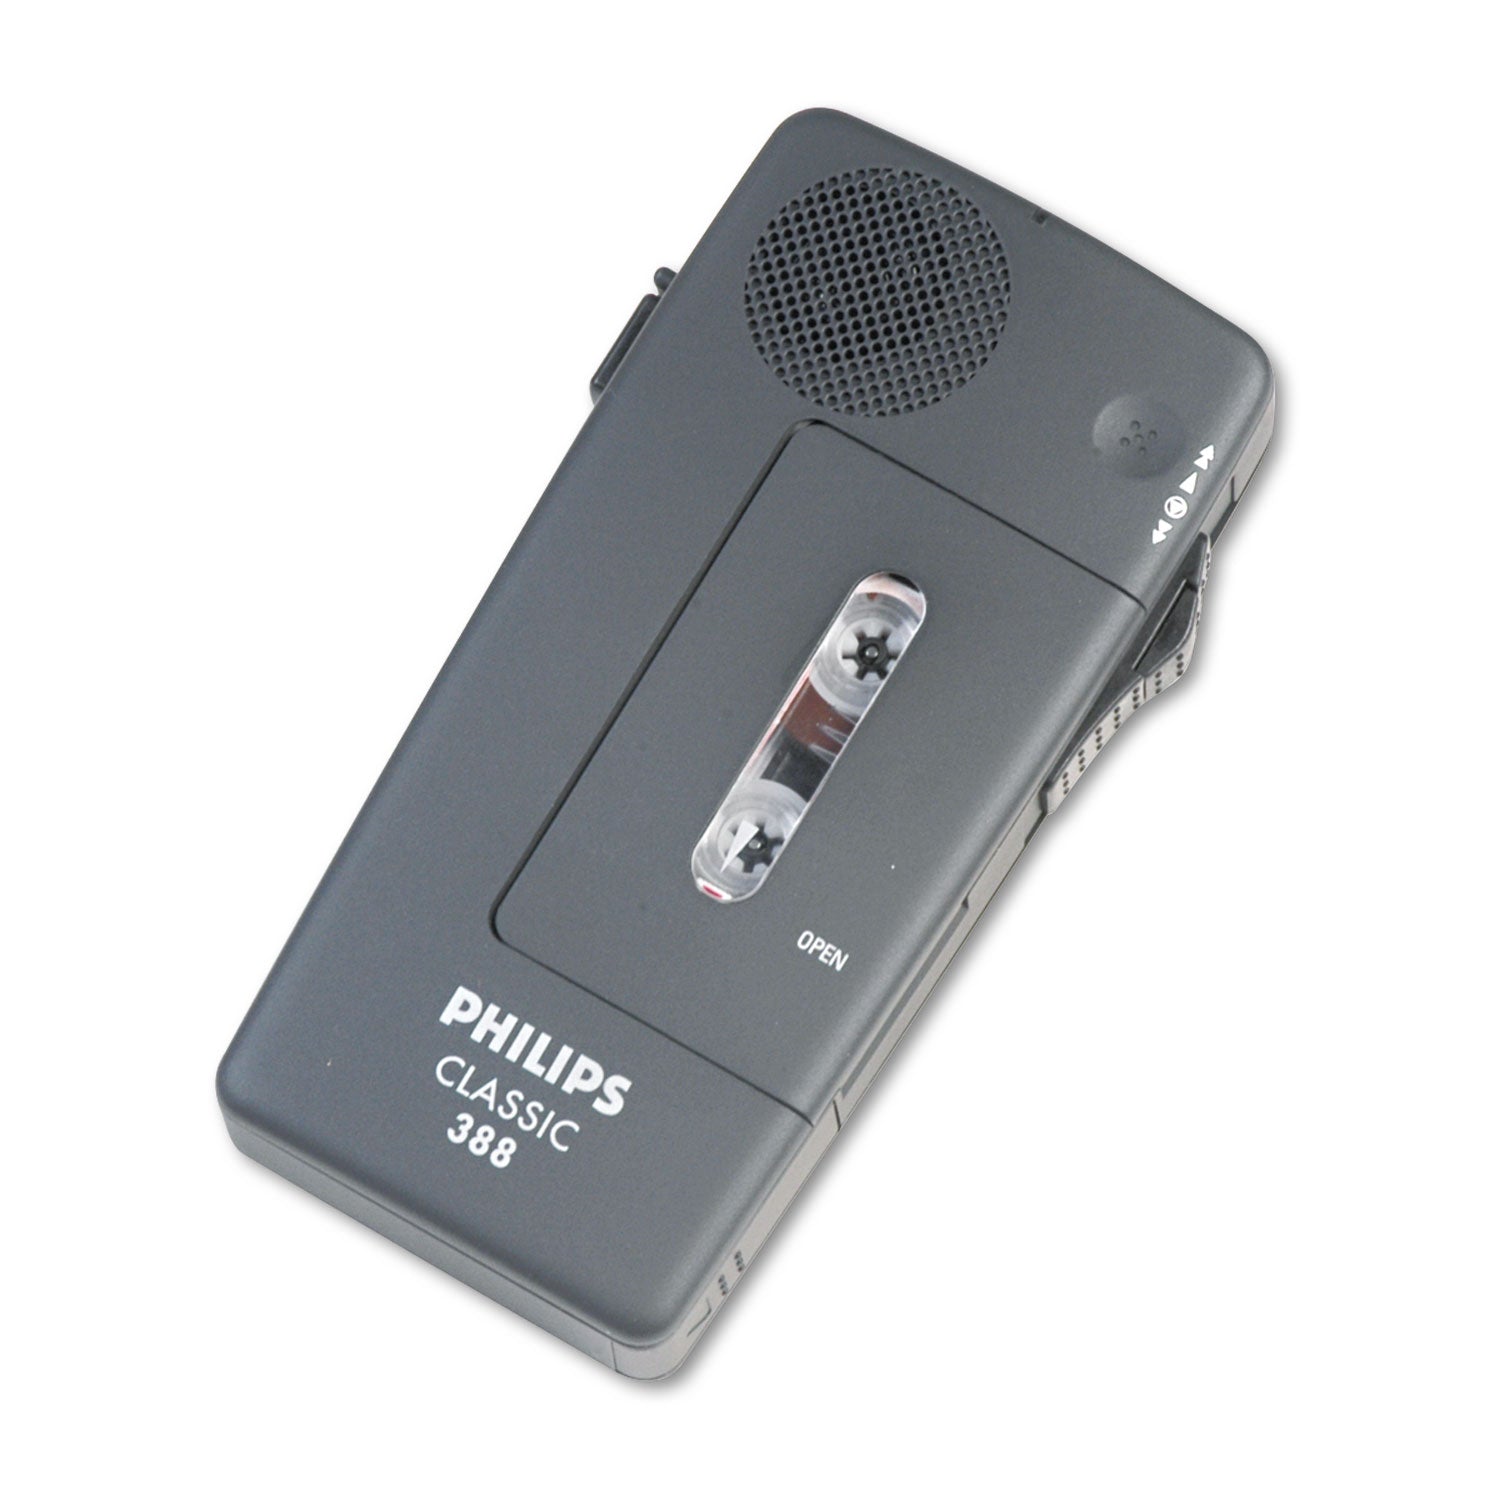 Pocket Memo 388 Slide Switch Mini Cassette Dictation Recorder - 